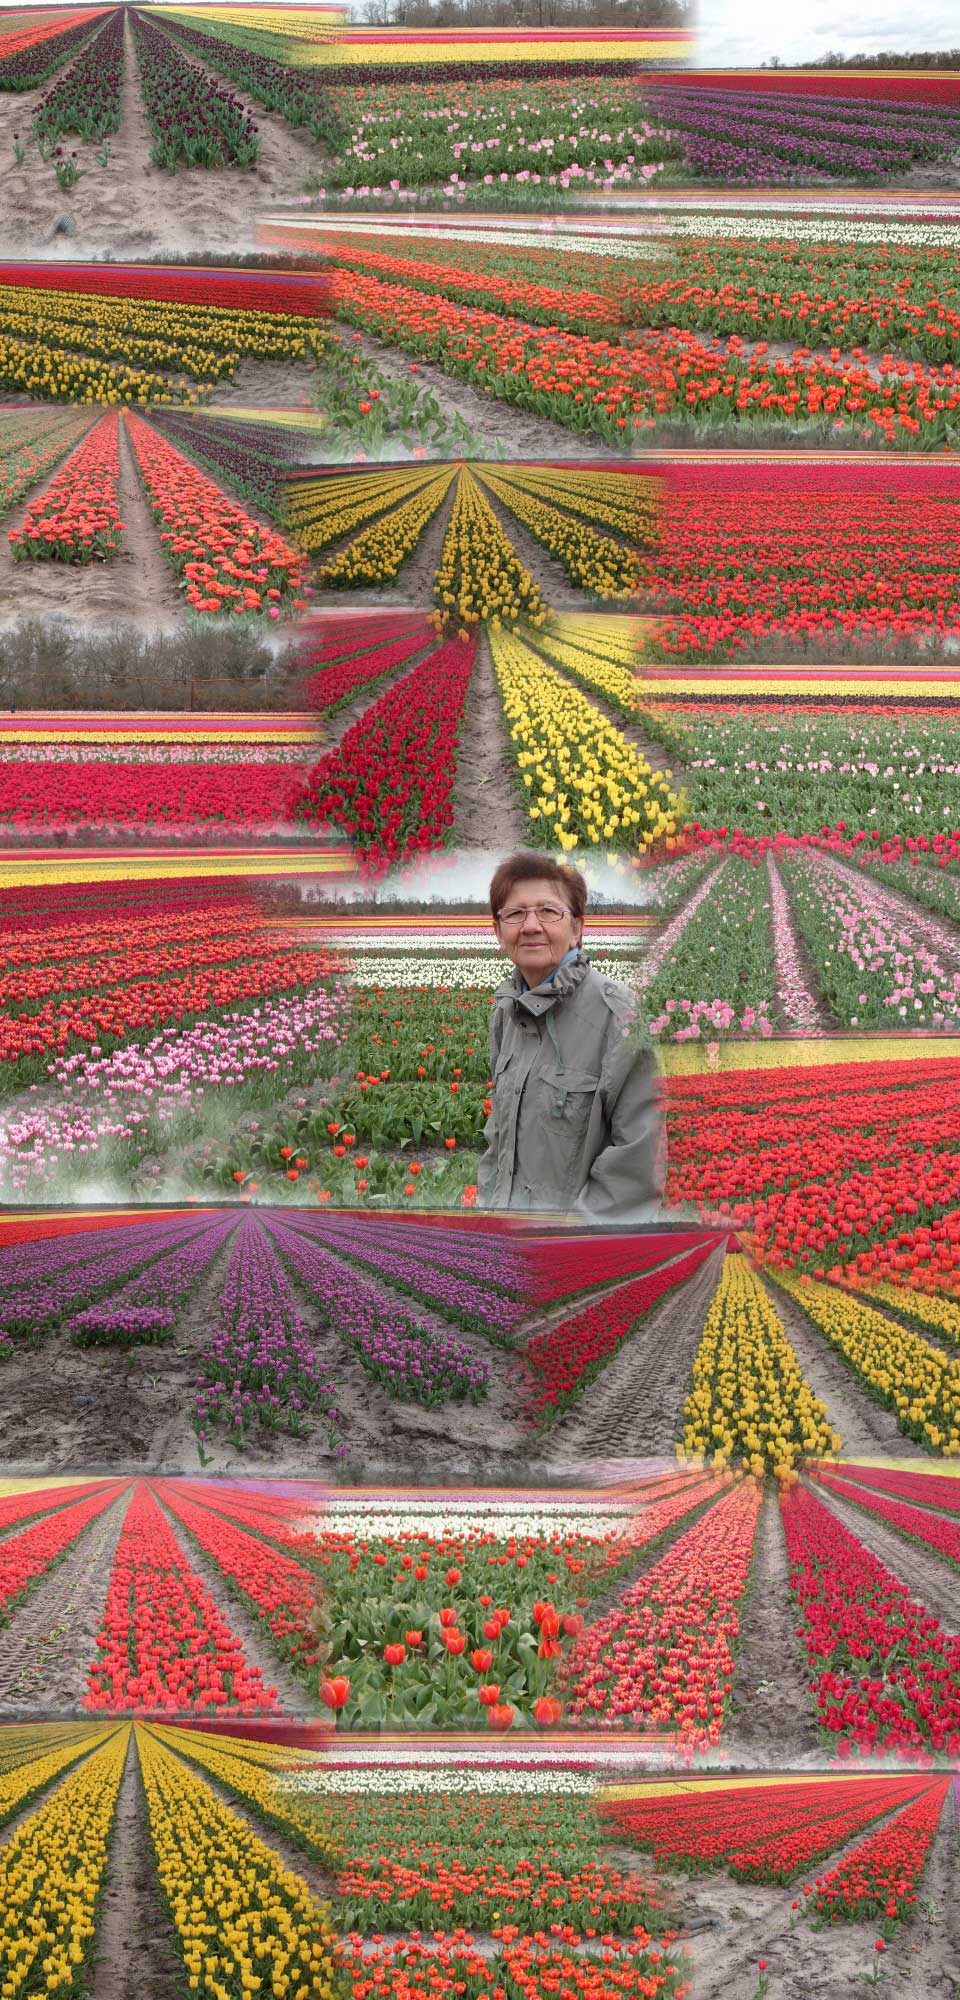 Champs de tulipes près de Pissos